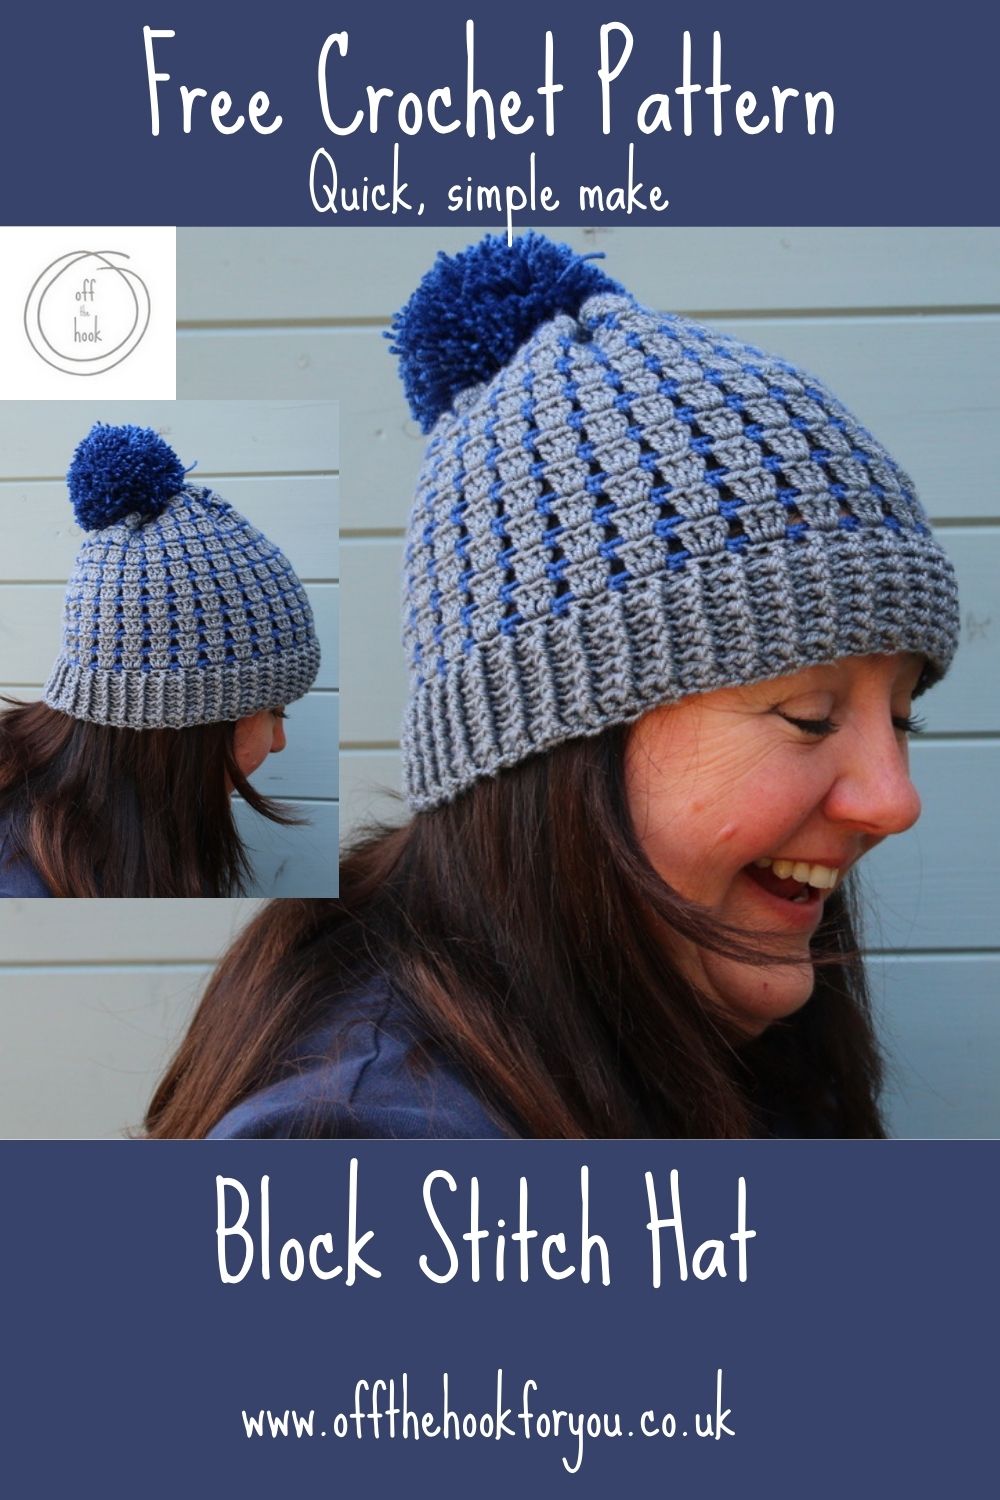 Block stitch crochet hat - free pattern